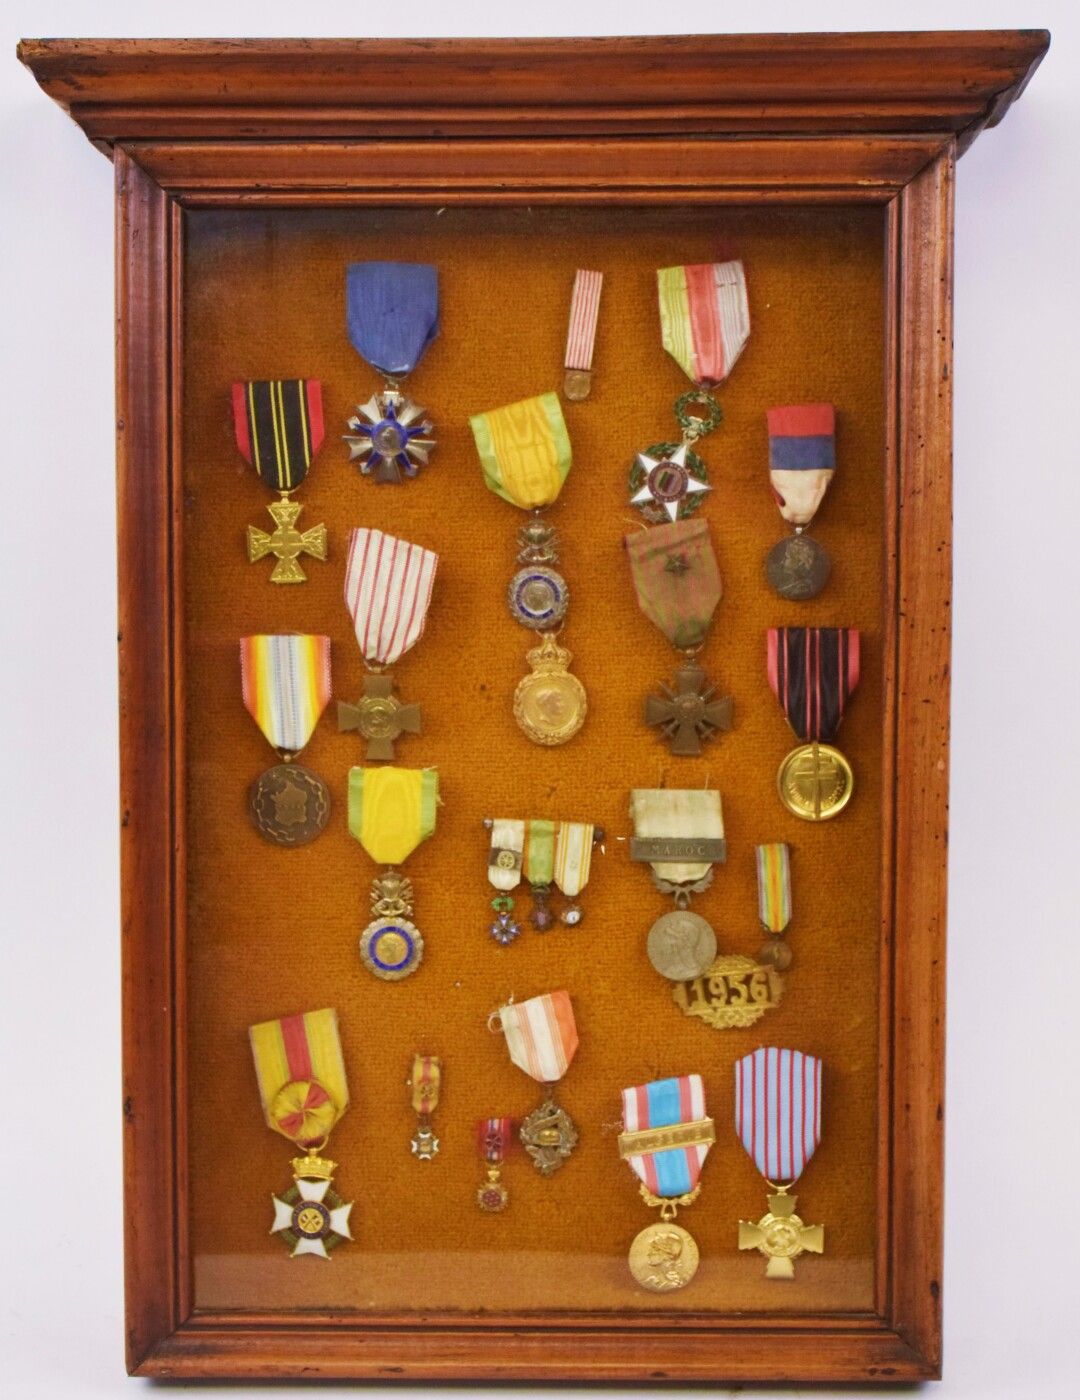 Null [MILITARIA]

装有16枚奖章的框架，包括。

- 1954年抵抗运动志愿战士十字勋章

- 军功章（2枚

- 劳动荣誉勋章（？

- 1&hellip;